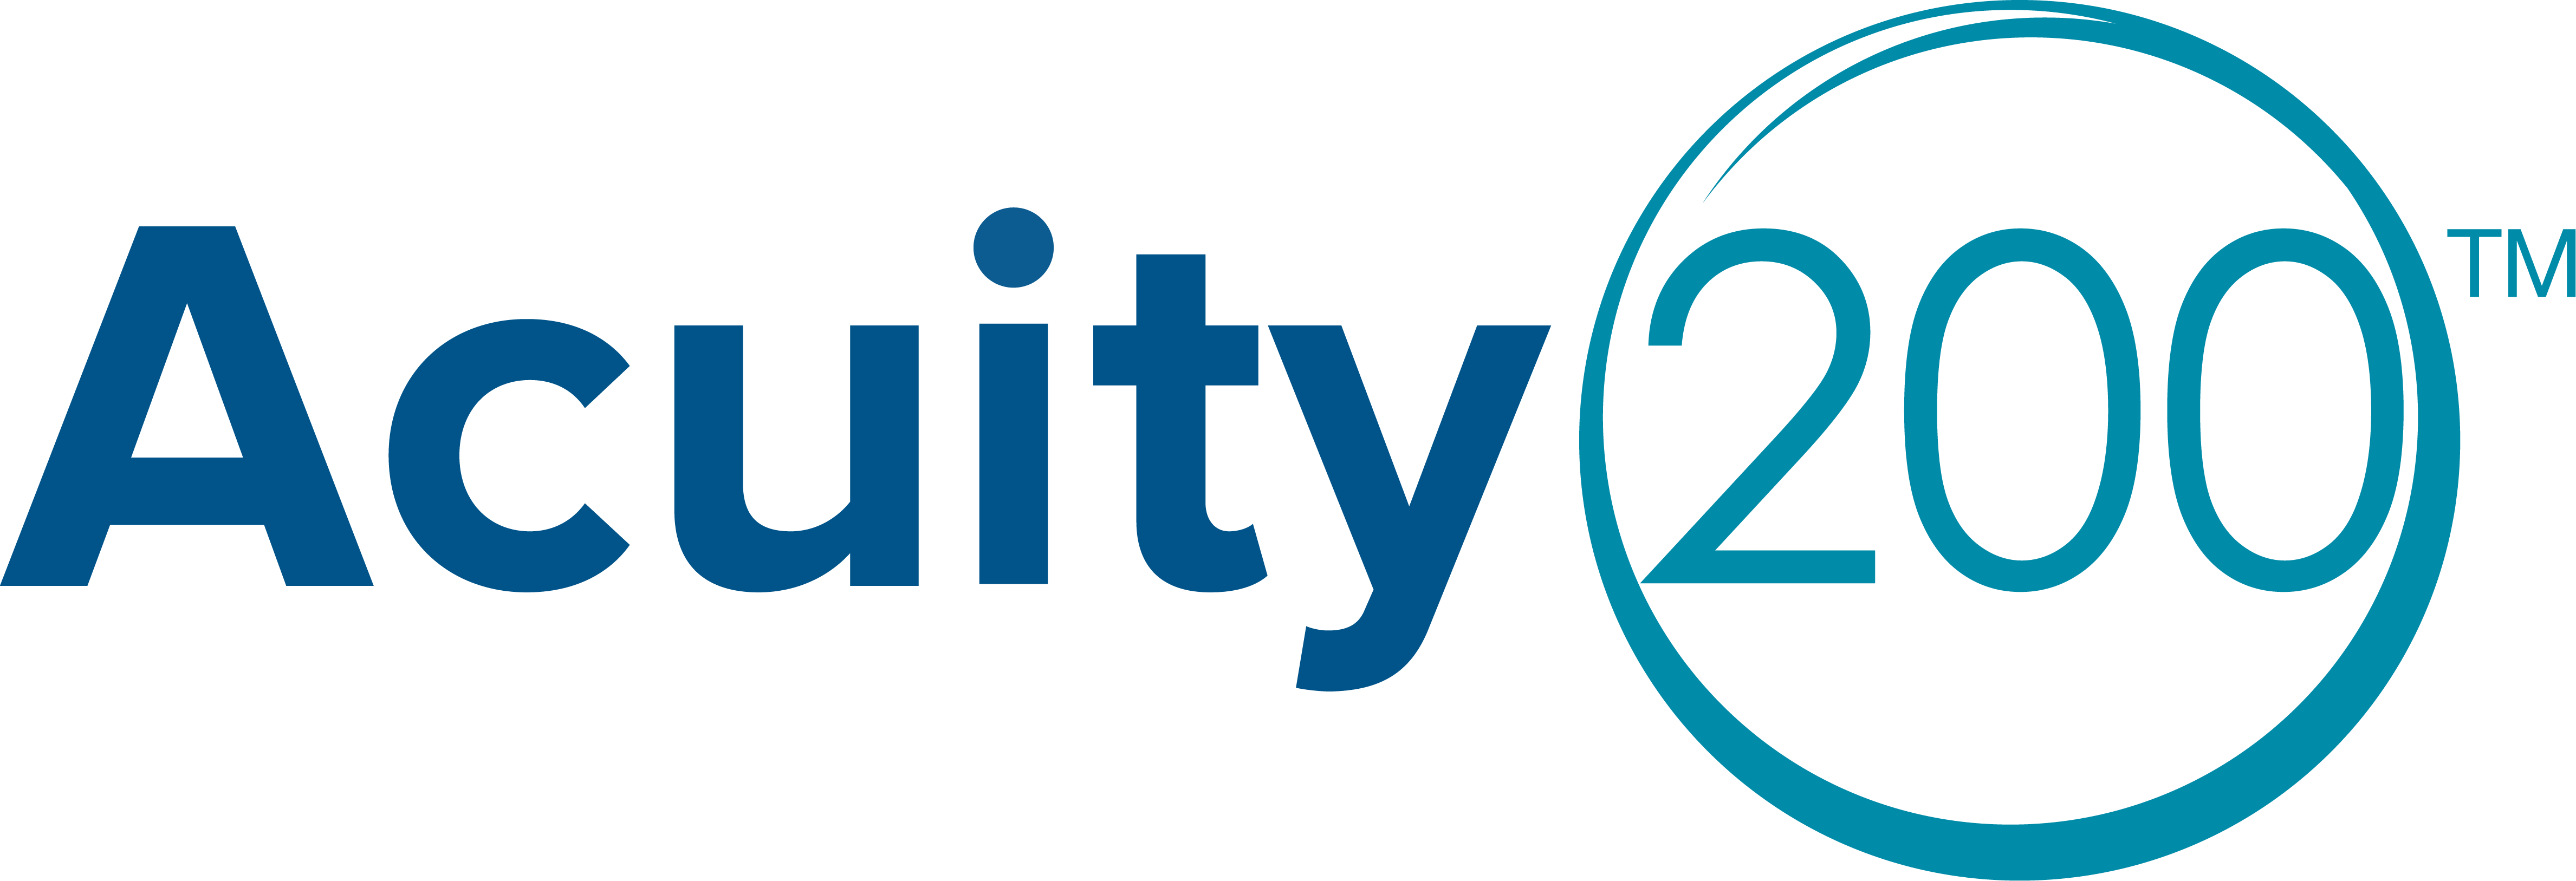 Acuity 200 logo